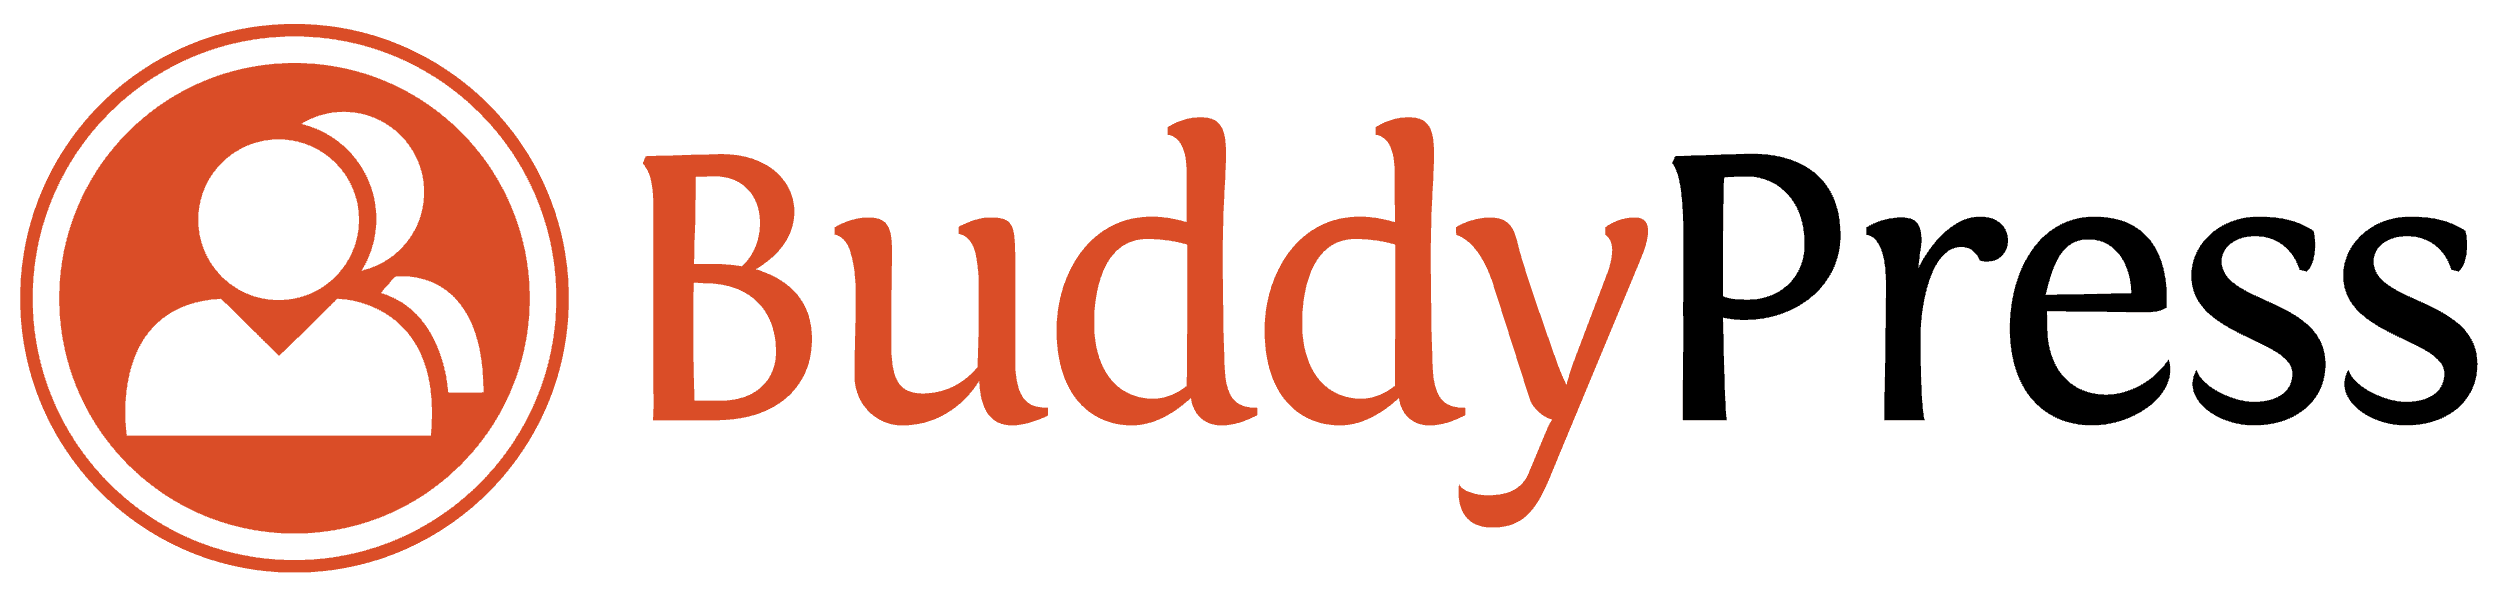 BuddyPress - Rede Social para Wordpress